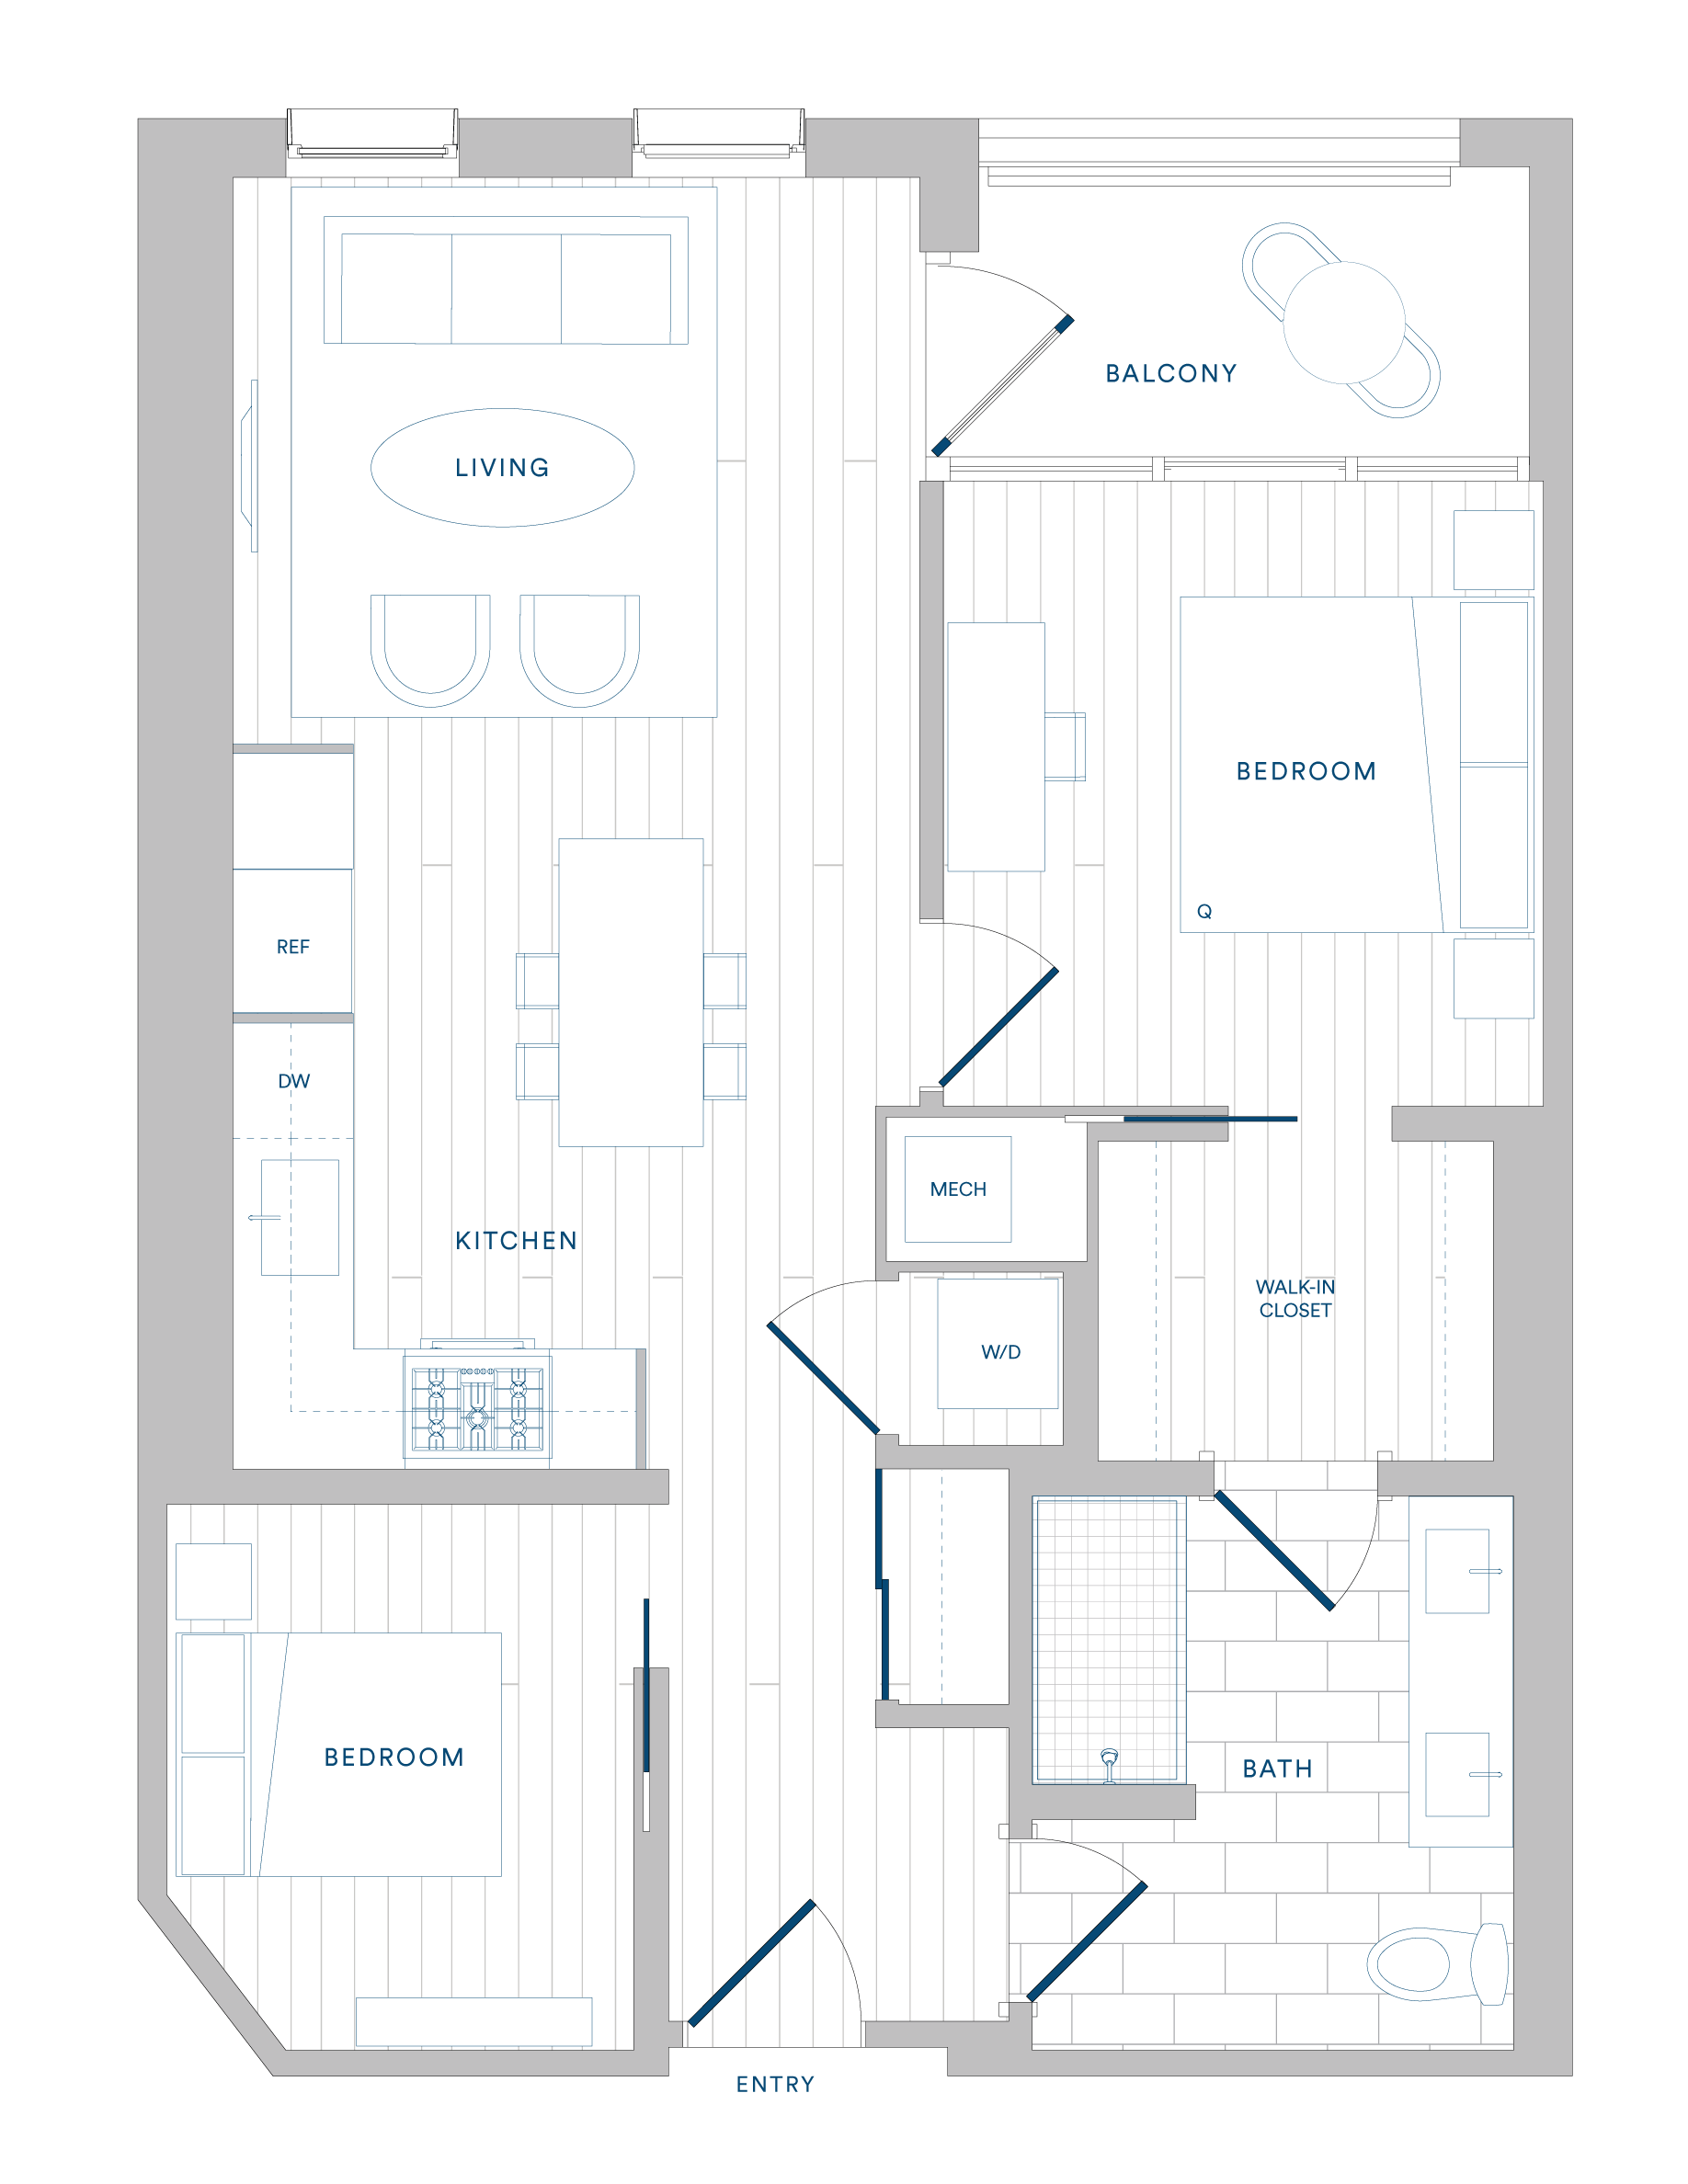 Floorplan for Apartment #408, 1 bedroom unit at Margarite